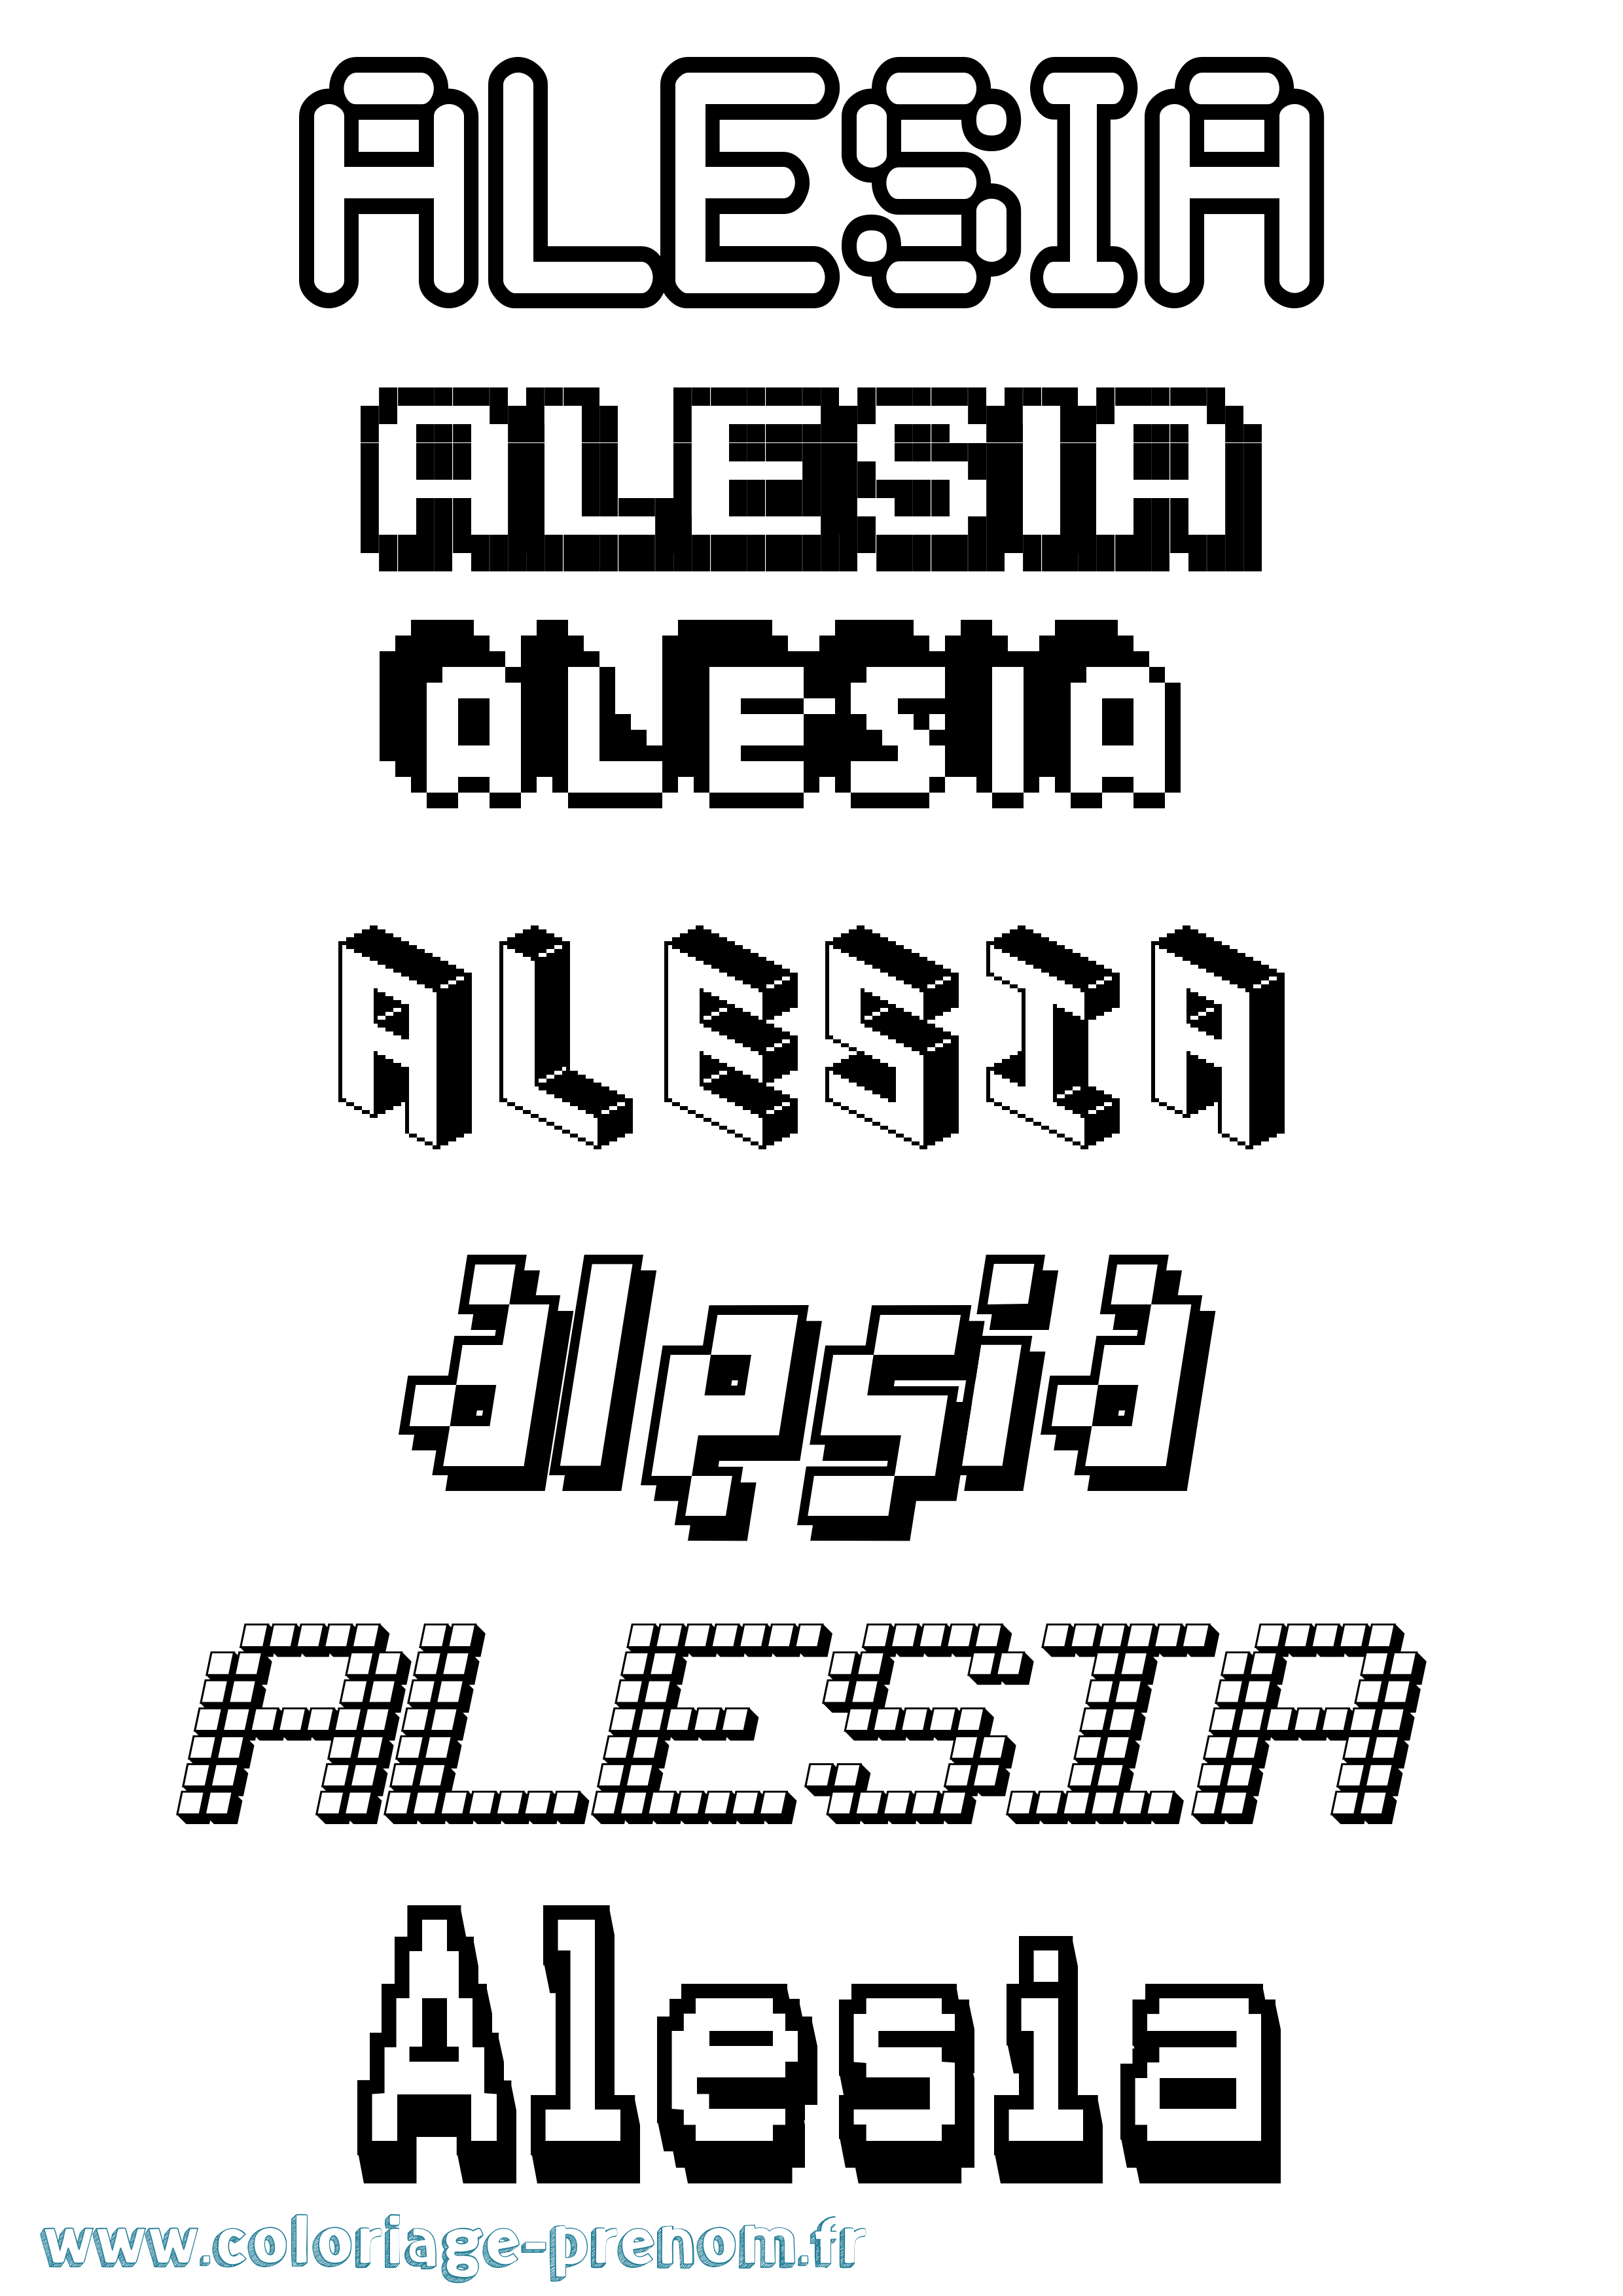 Coloriage prénom Alesia Pixel